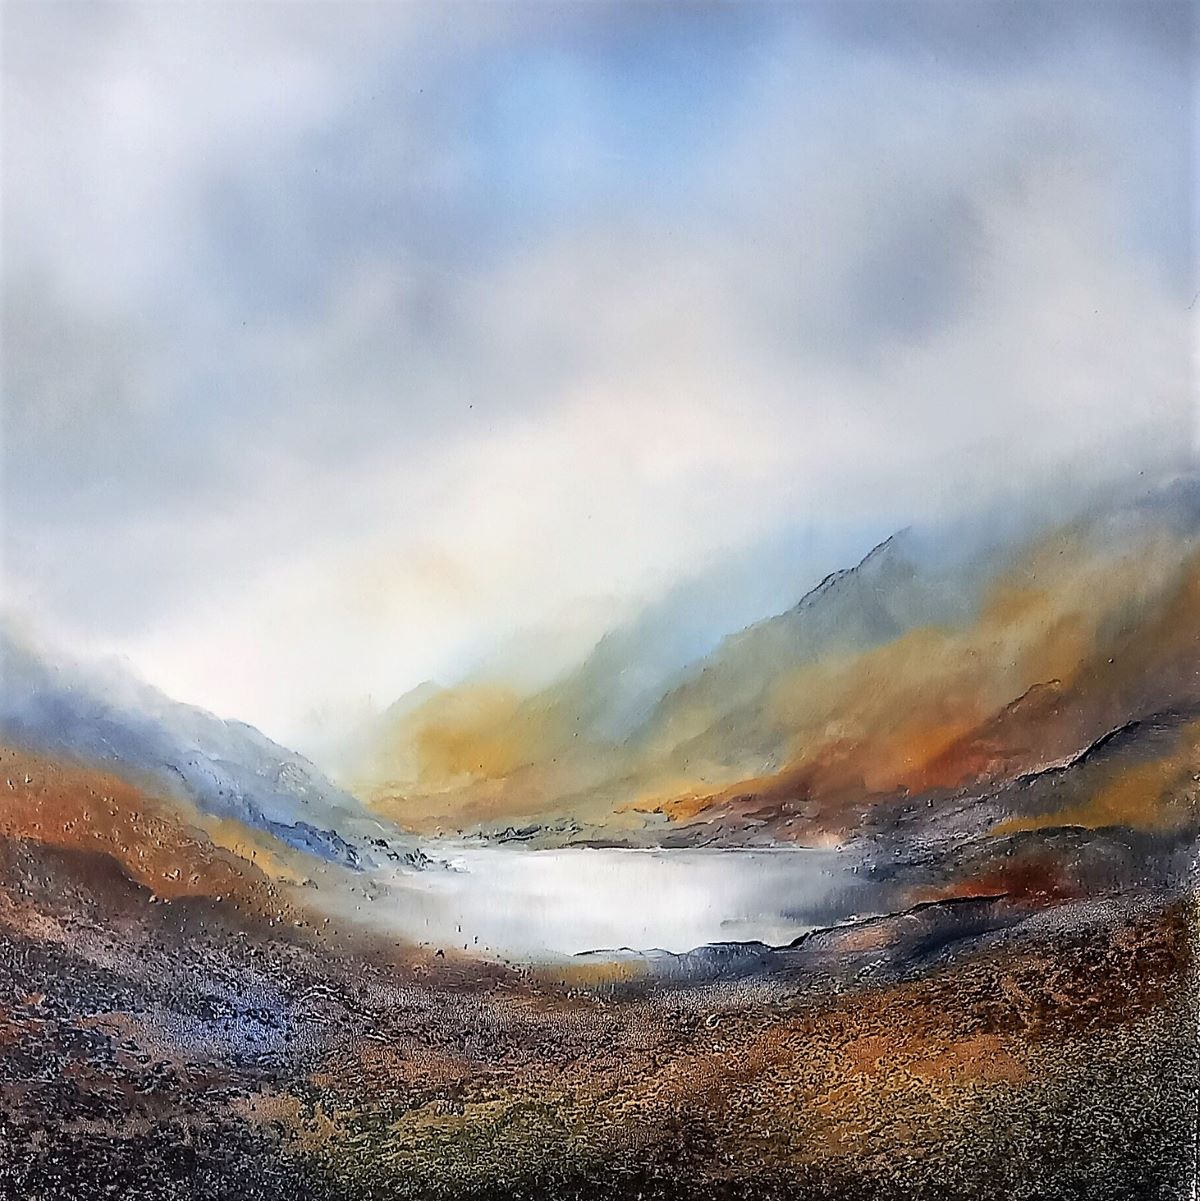 'Loch Slapin - Isle of Skye' by artist Peter Dworok